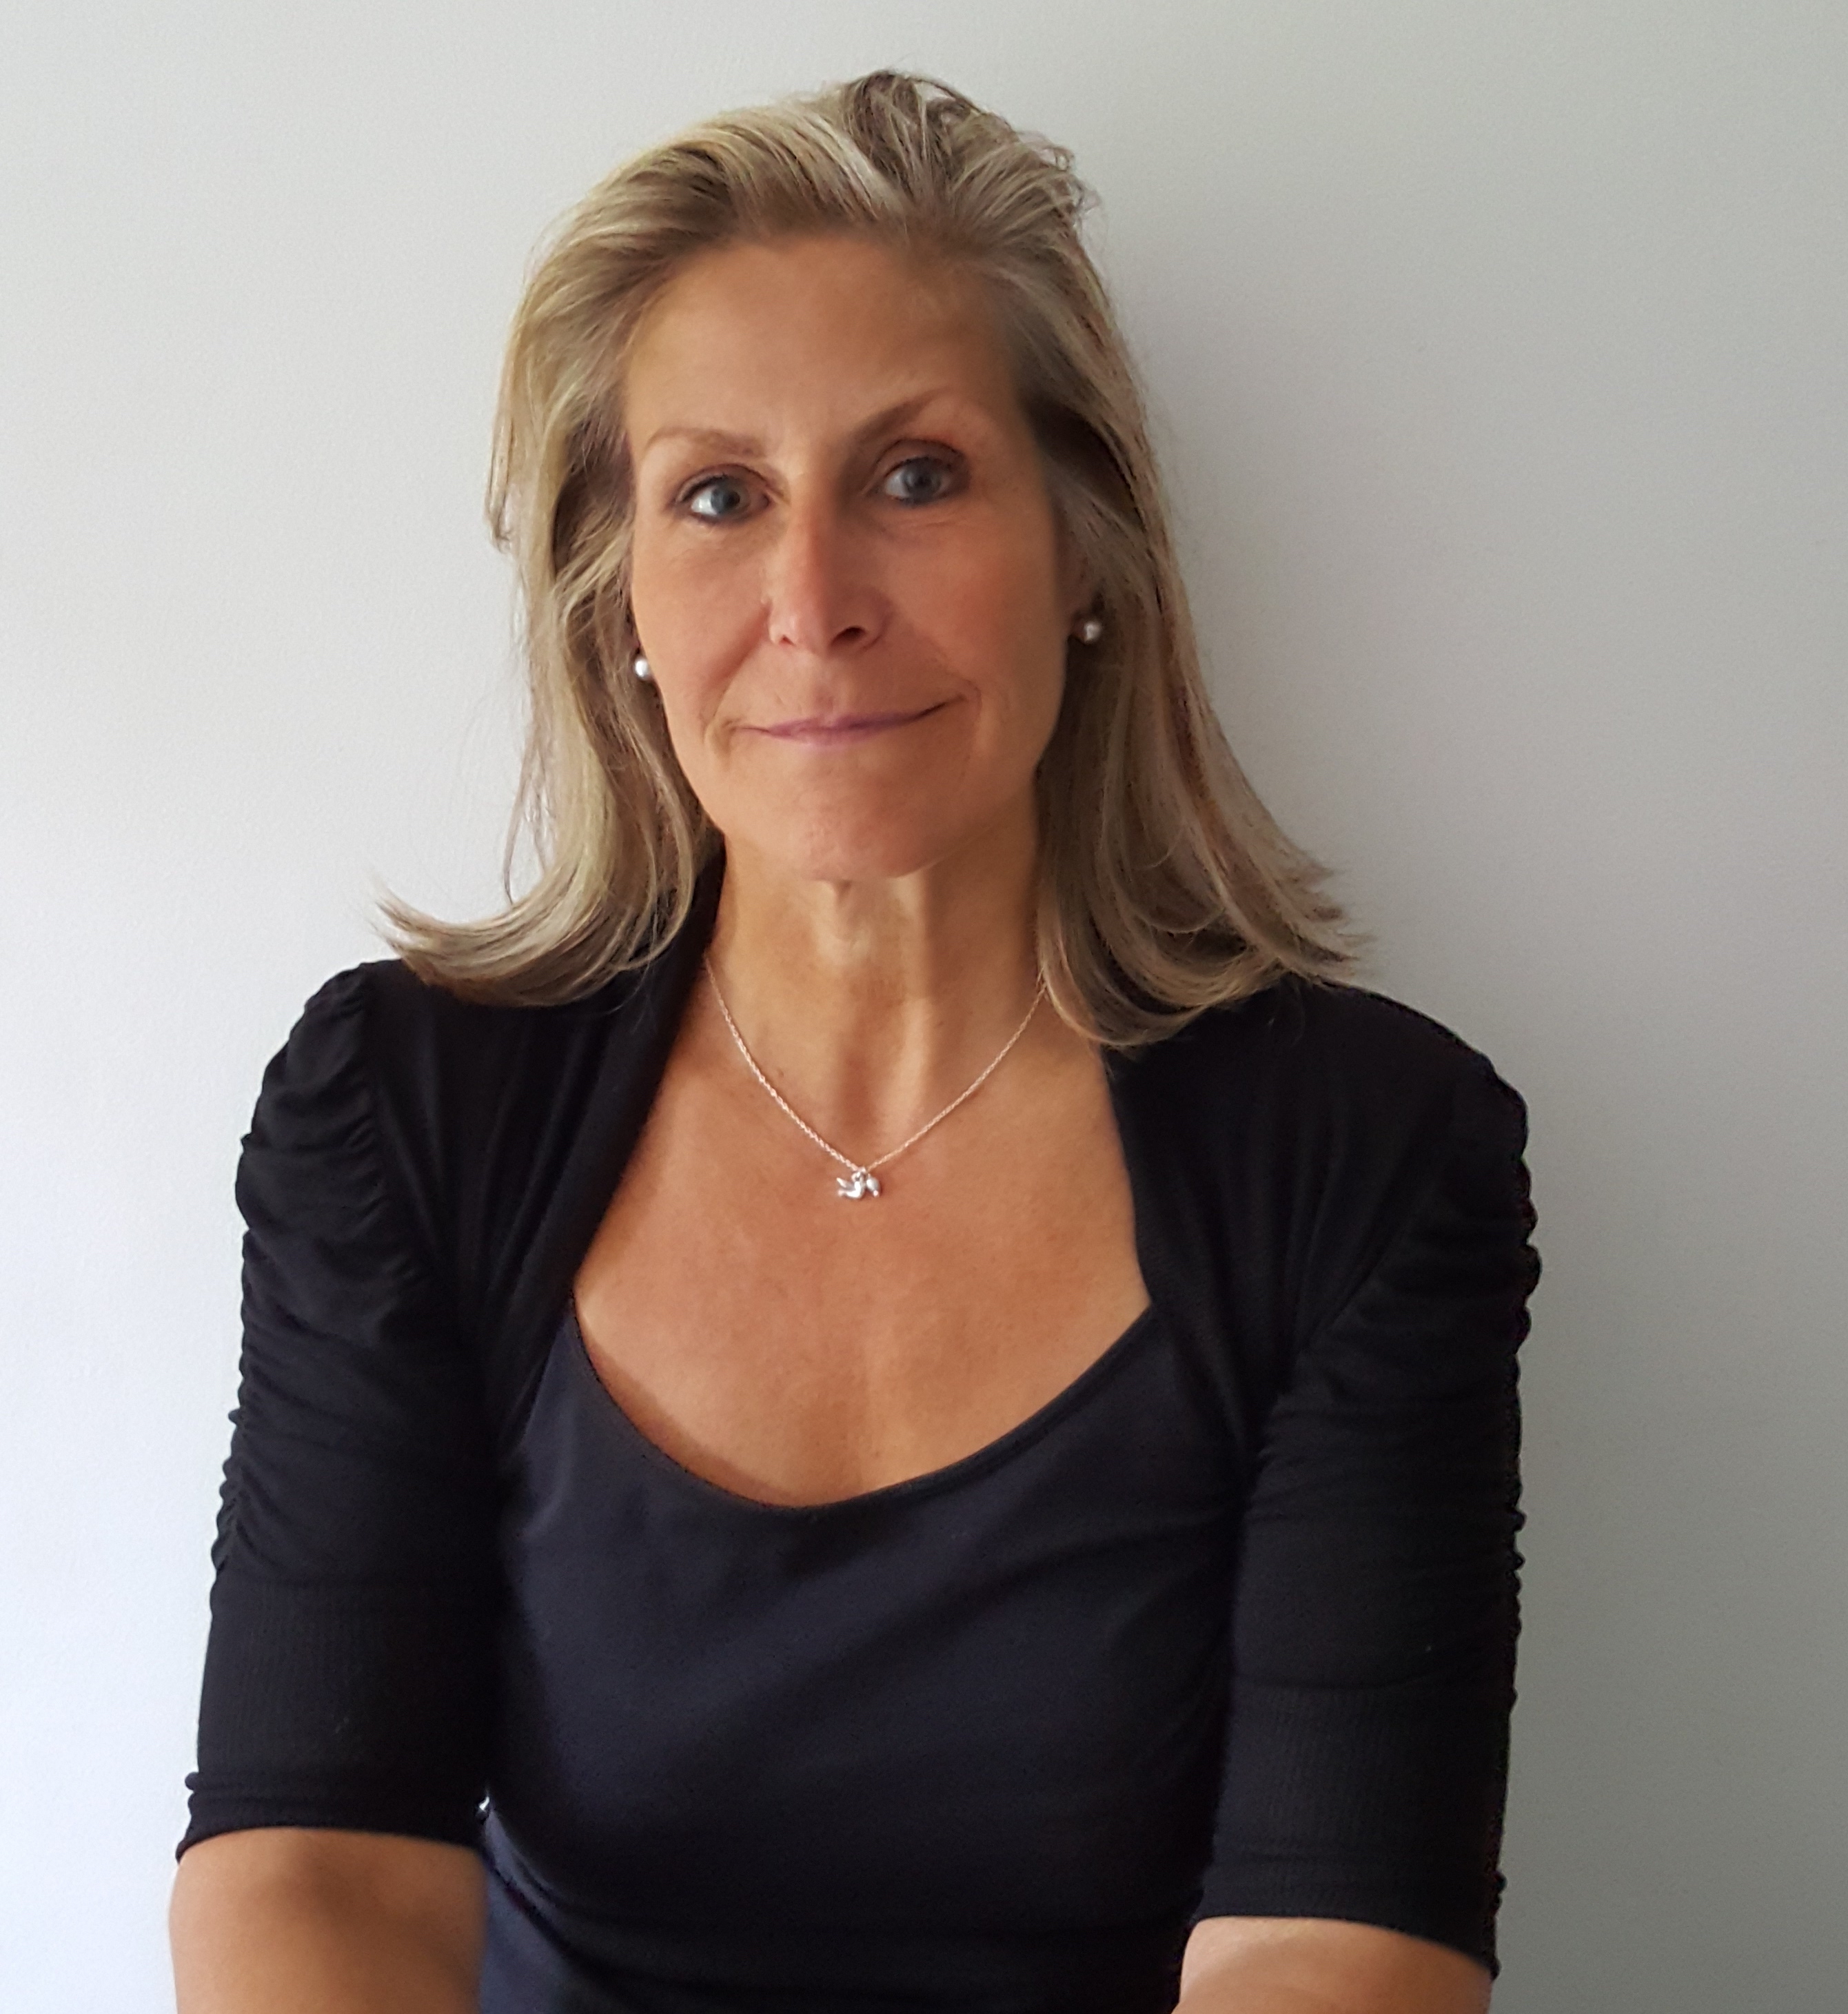 Meet the Therapist: Louise Ennis